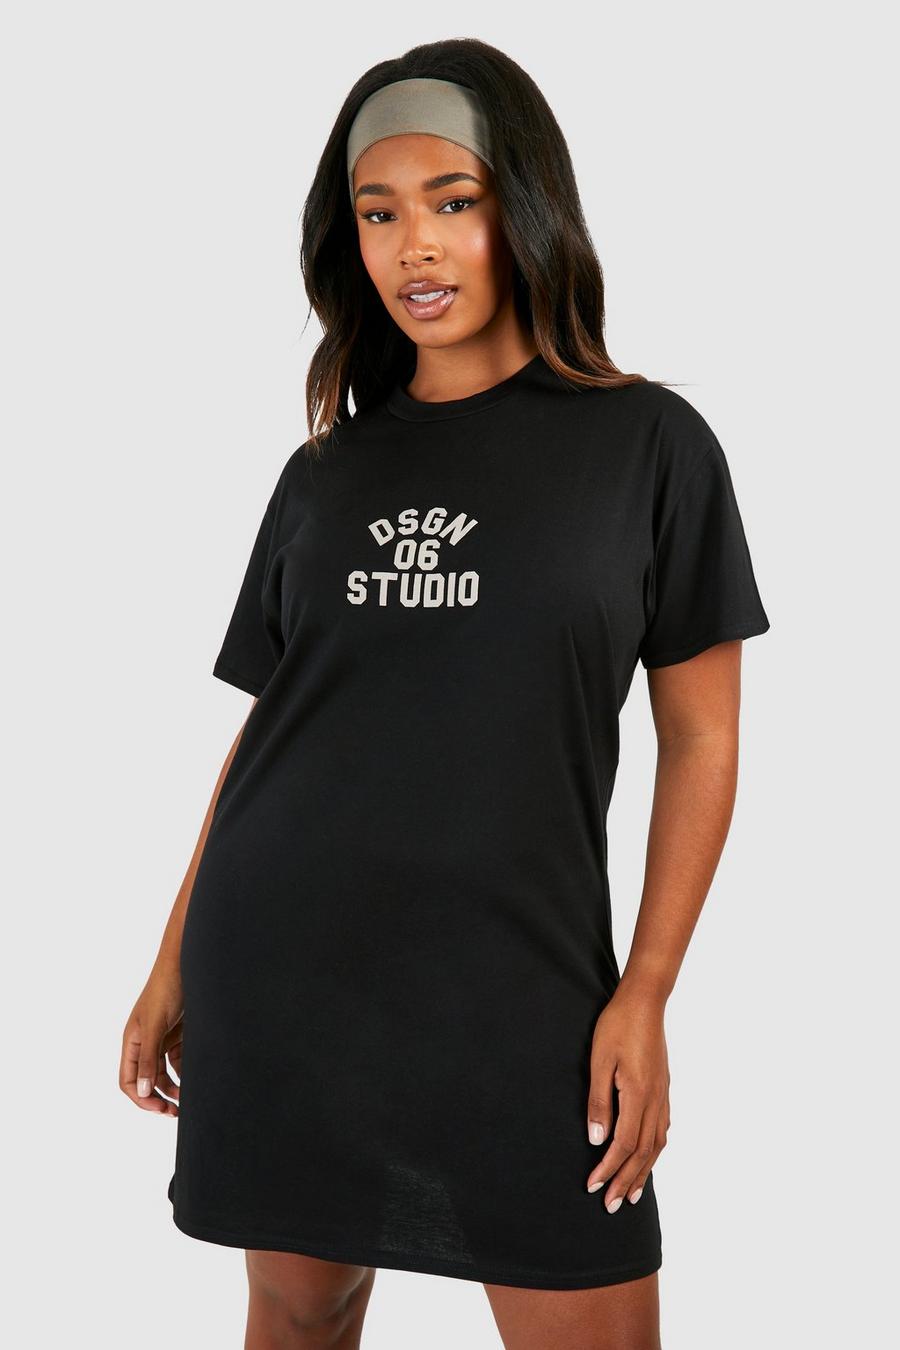 Vestido camiseta Plus con estampado Dsgn Studio, Black image number 1